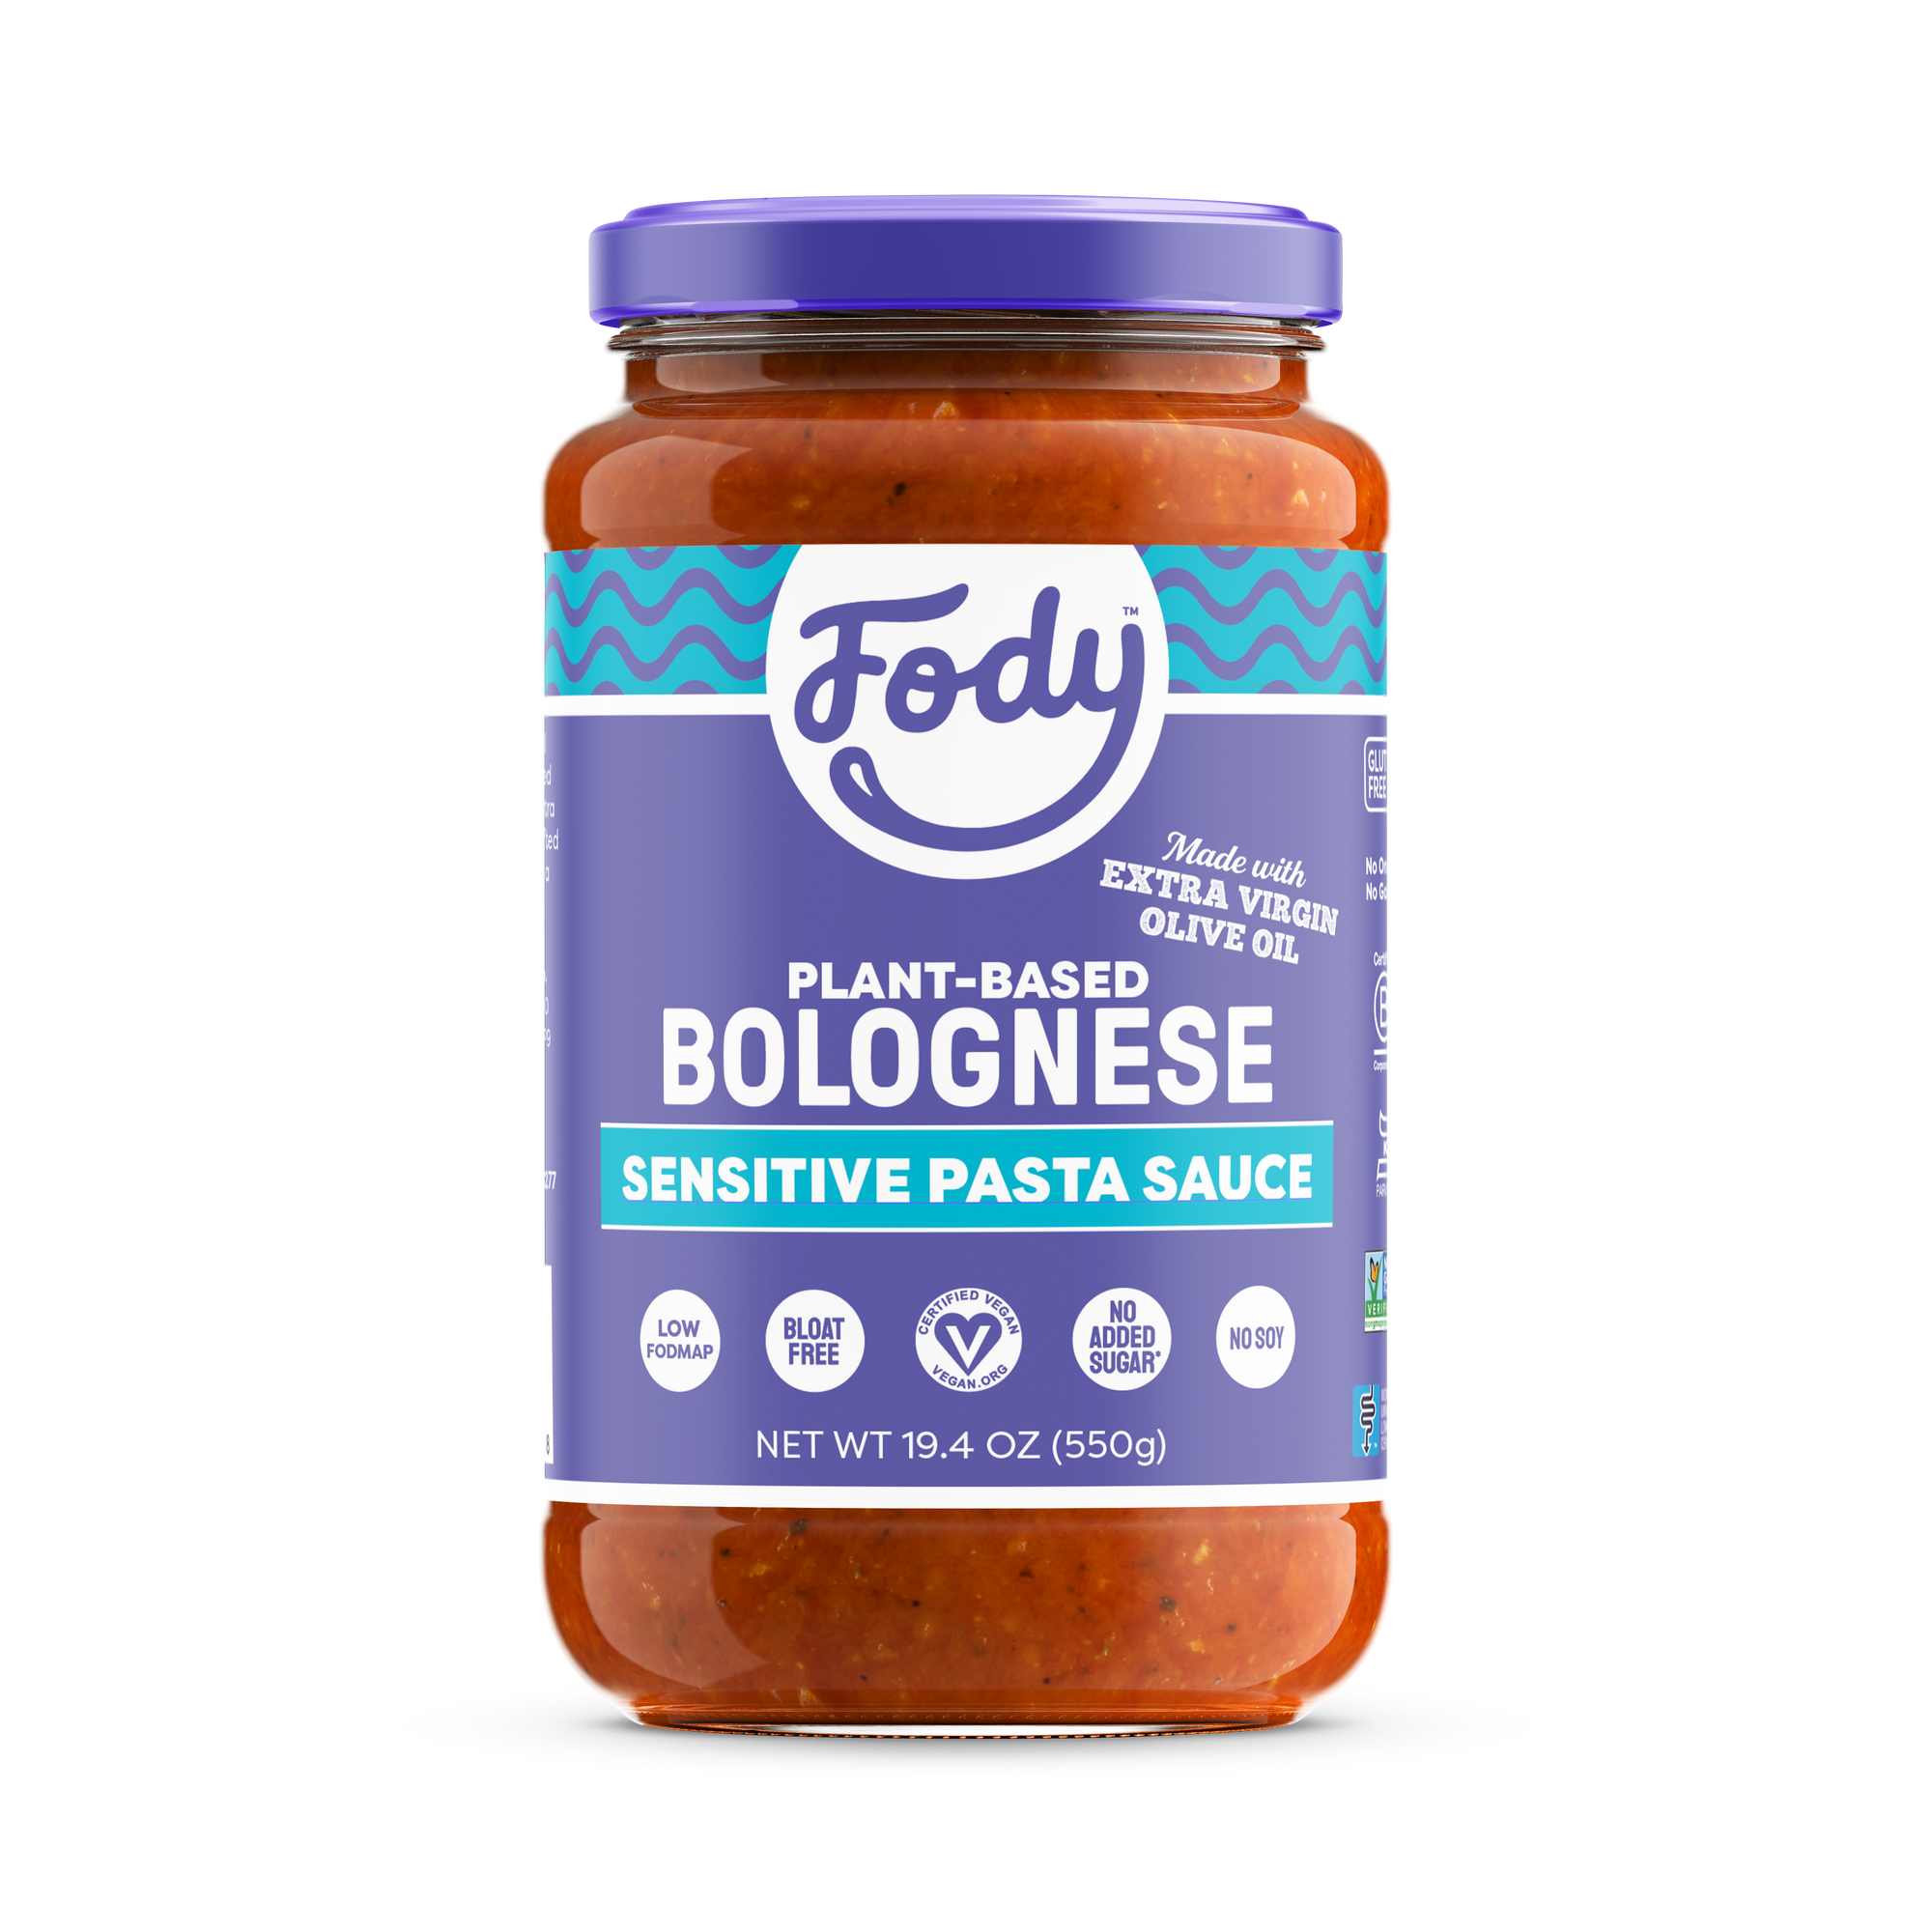 Vegan Bolognese Pasta Sauce